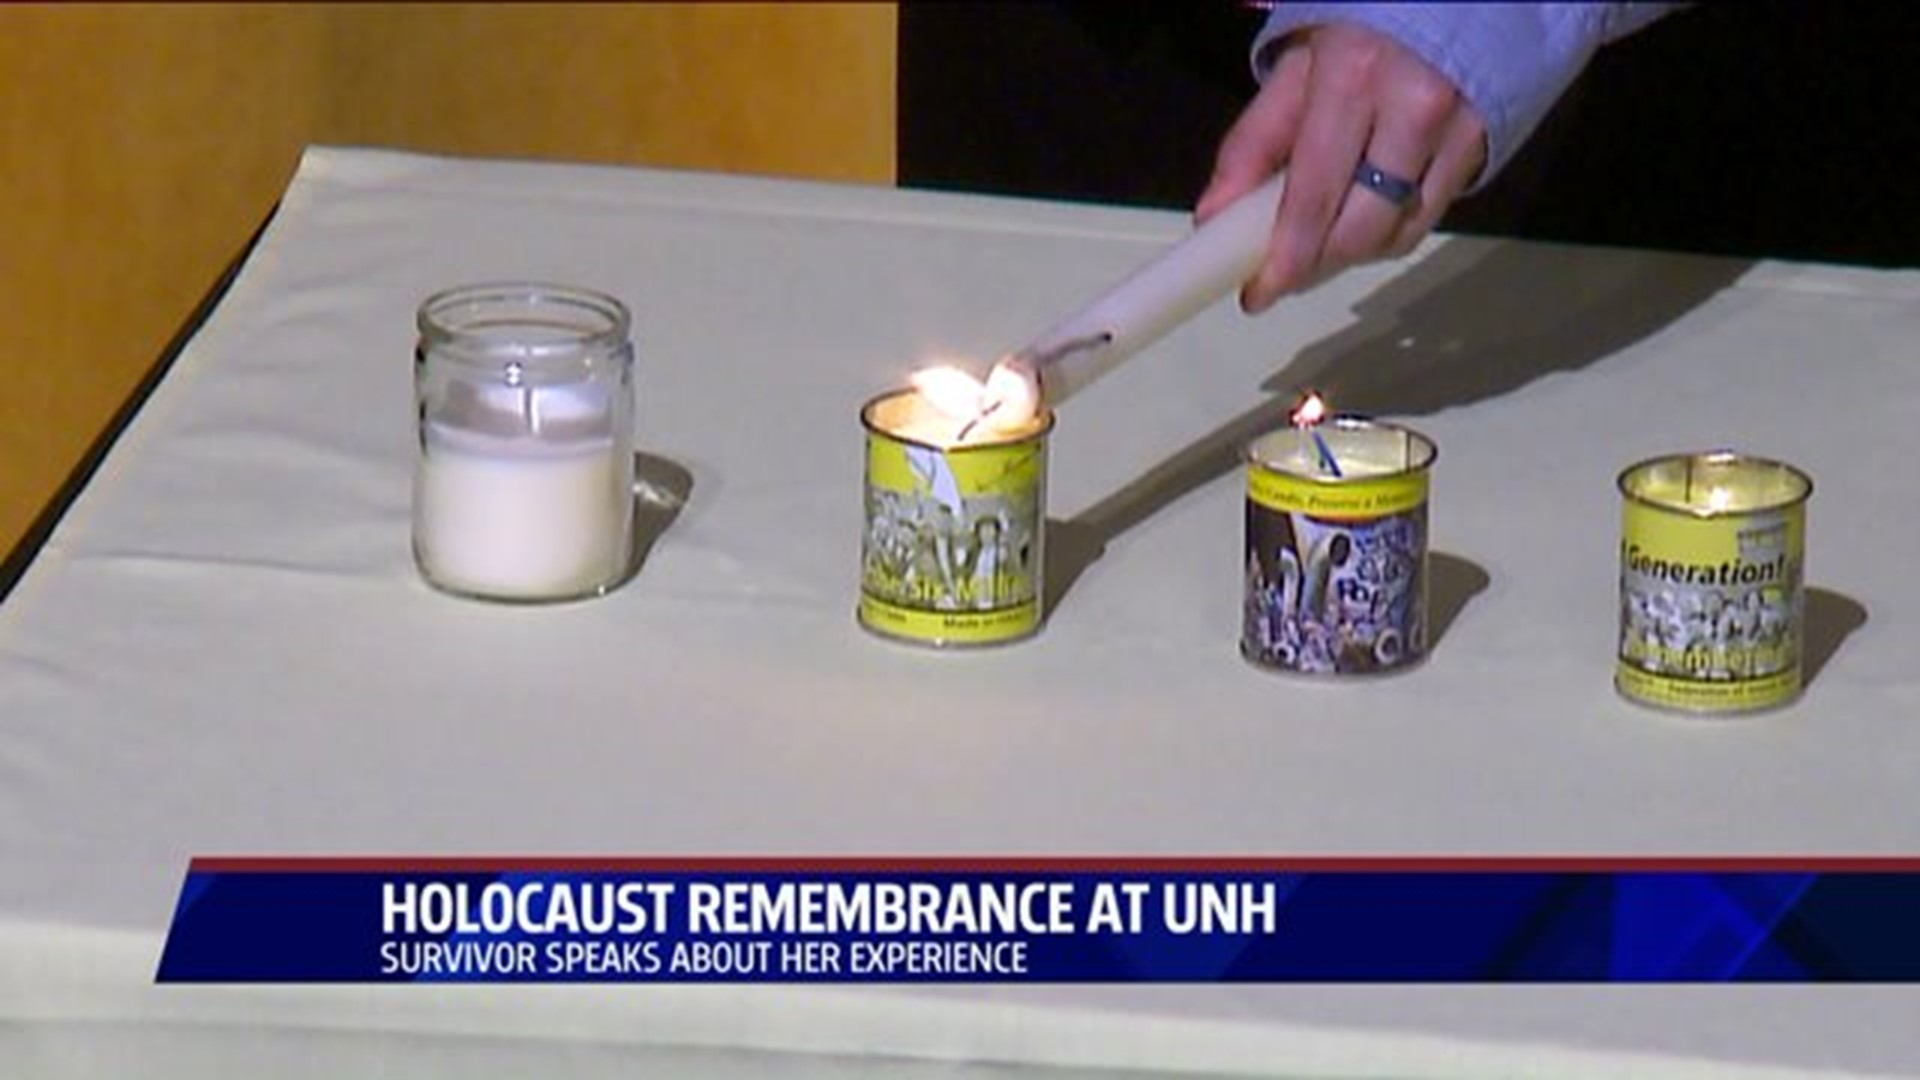 Survivor speaks at Holocaust rememberance ceremony